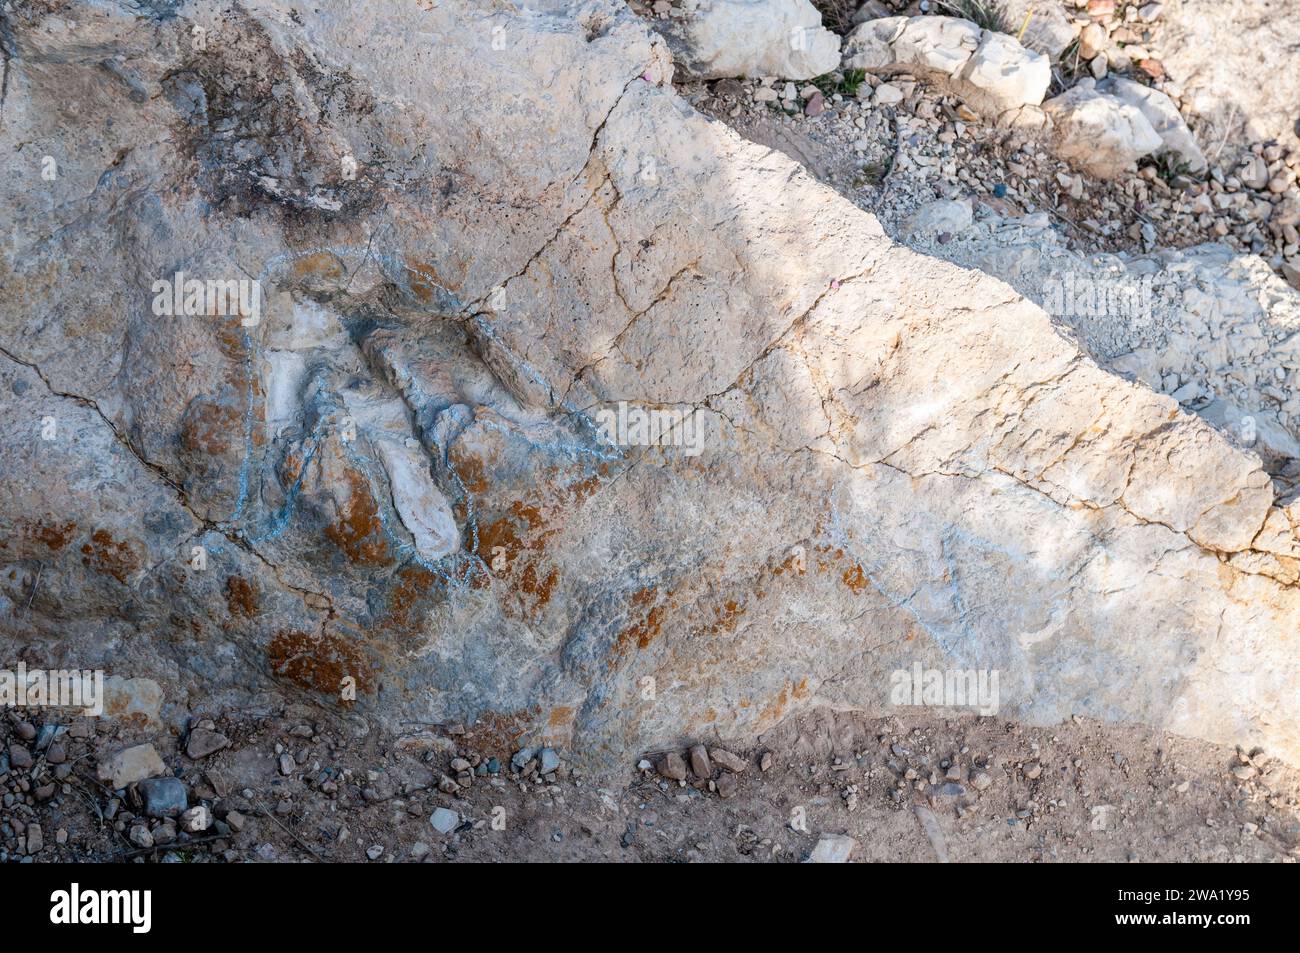 fossil track, Paleontological sites of vertebrates from the Early Cretaceous, Villanueva de Huerva, Aragon, Spain Stock Photo